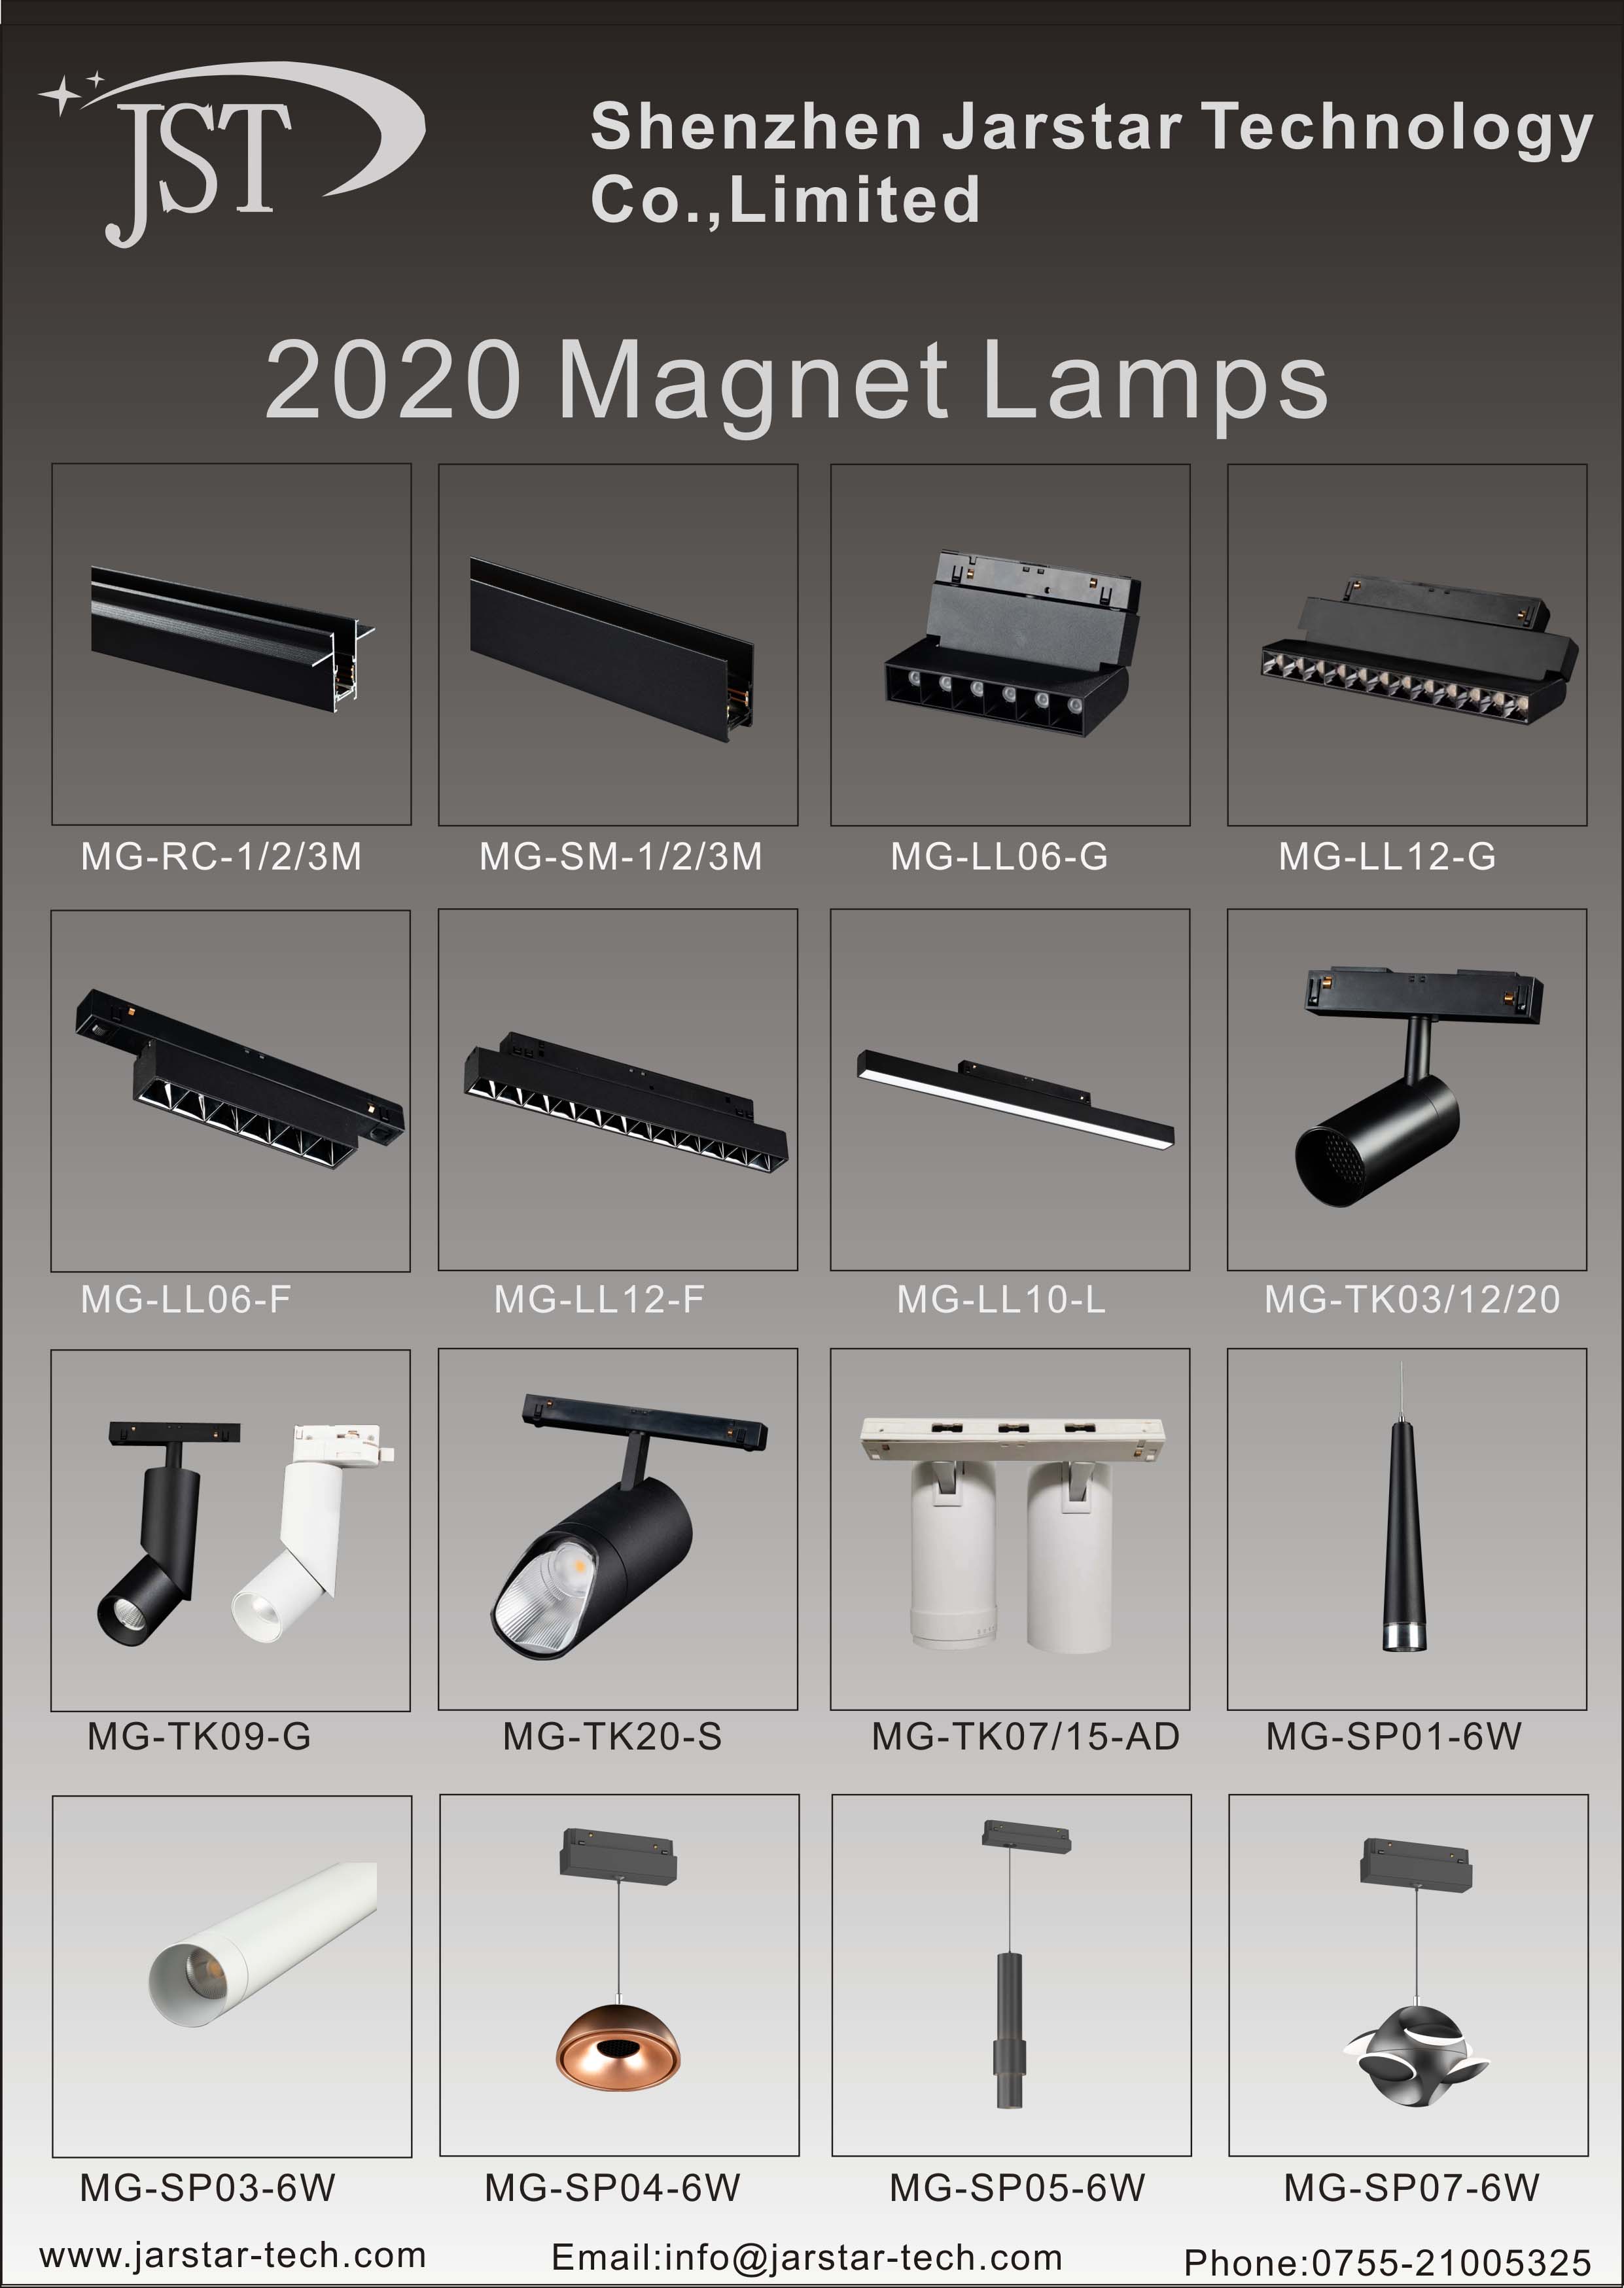 NEW LED Magnet Light Design By JST